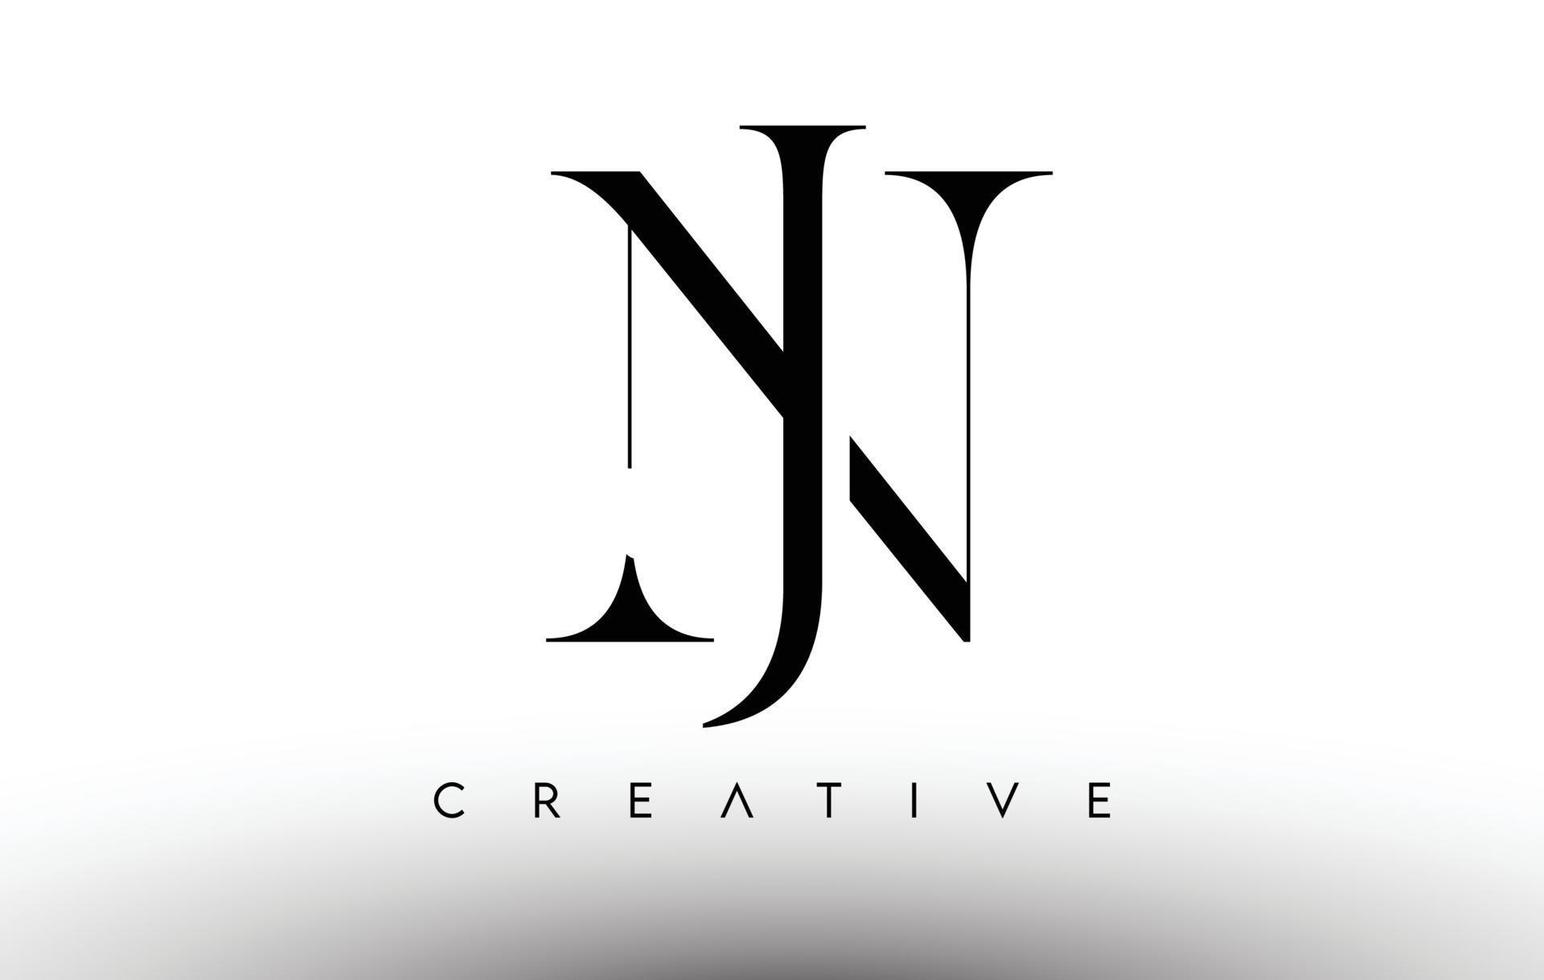 nj minimalistisch serif modern letterlogo in zwart-wit. jn creatieve serif logo ontwerp pictogram vector